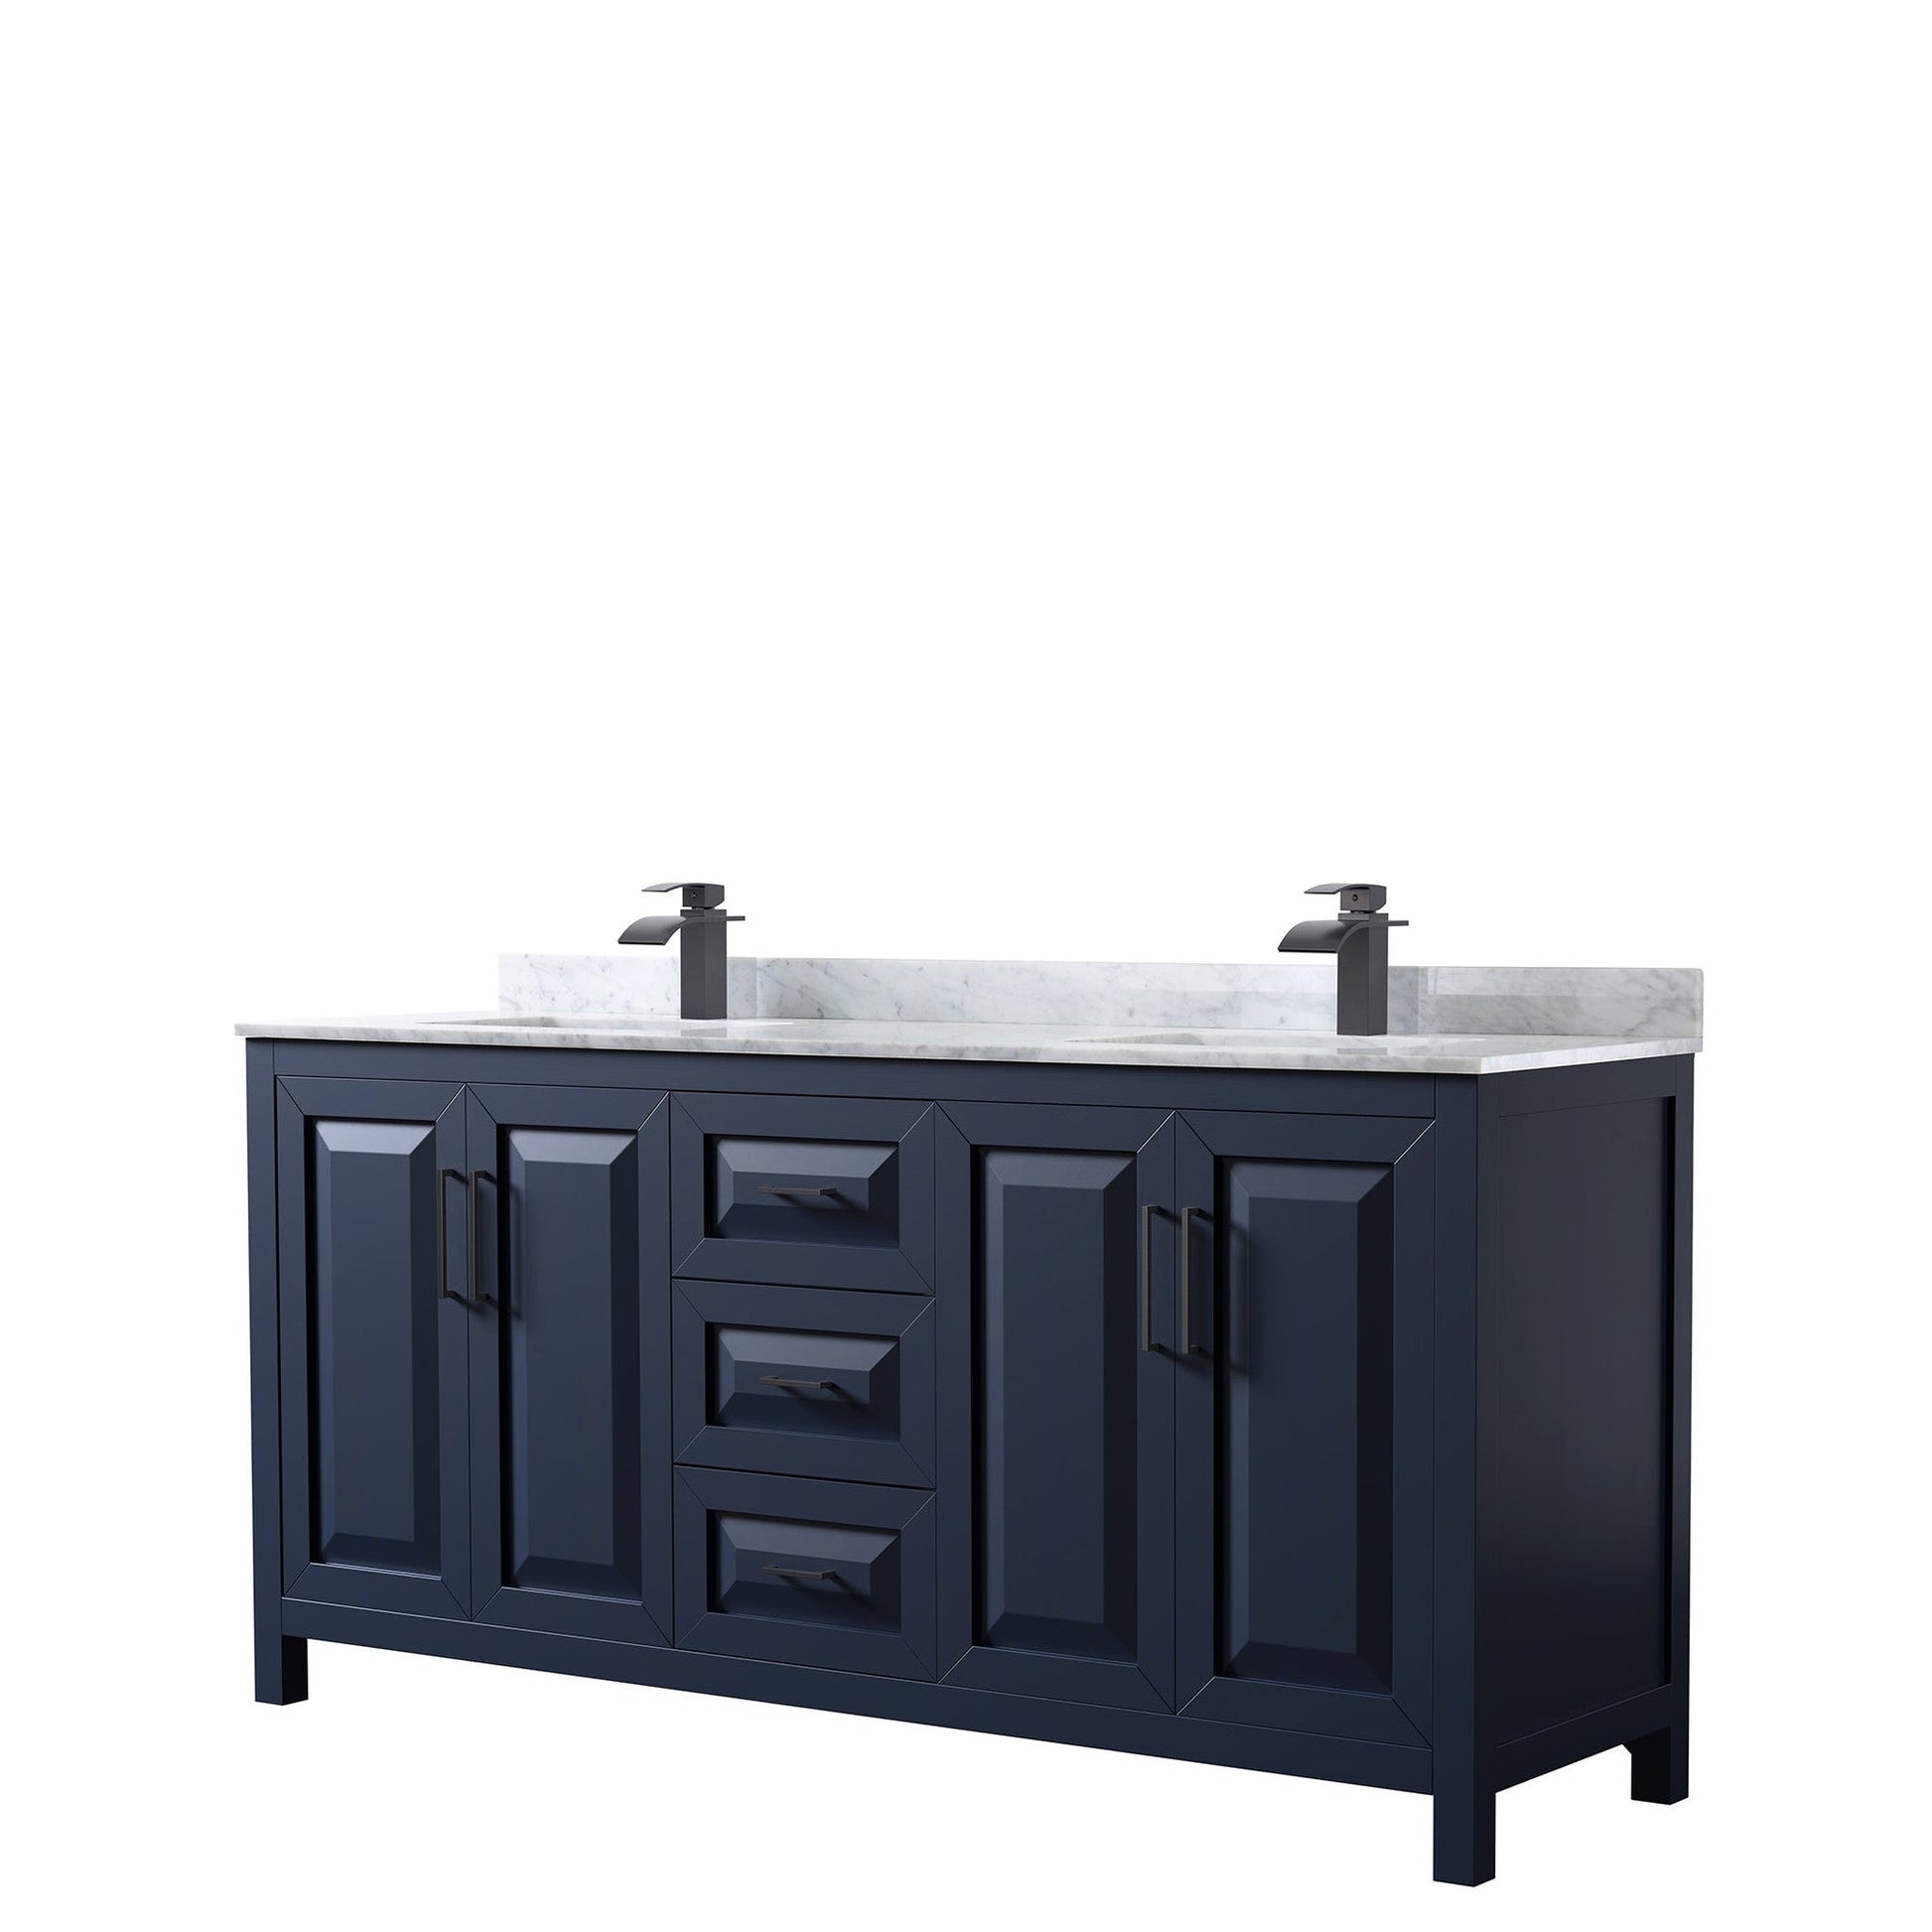 Daria 72" Double Bathroom Vanity in Dark Blue, White Carrara Marble Countertop, Undermount Square Sinks, Matte Black Trim